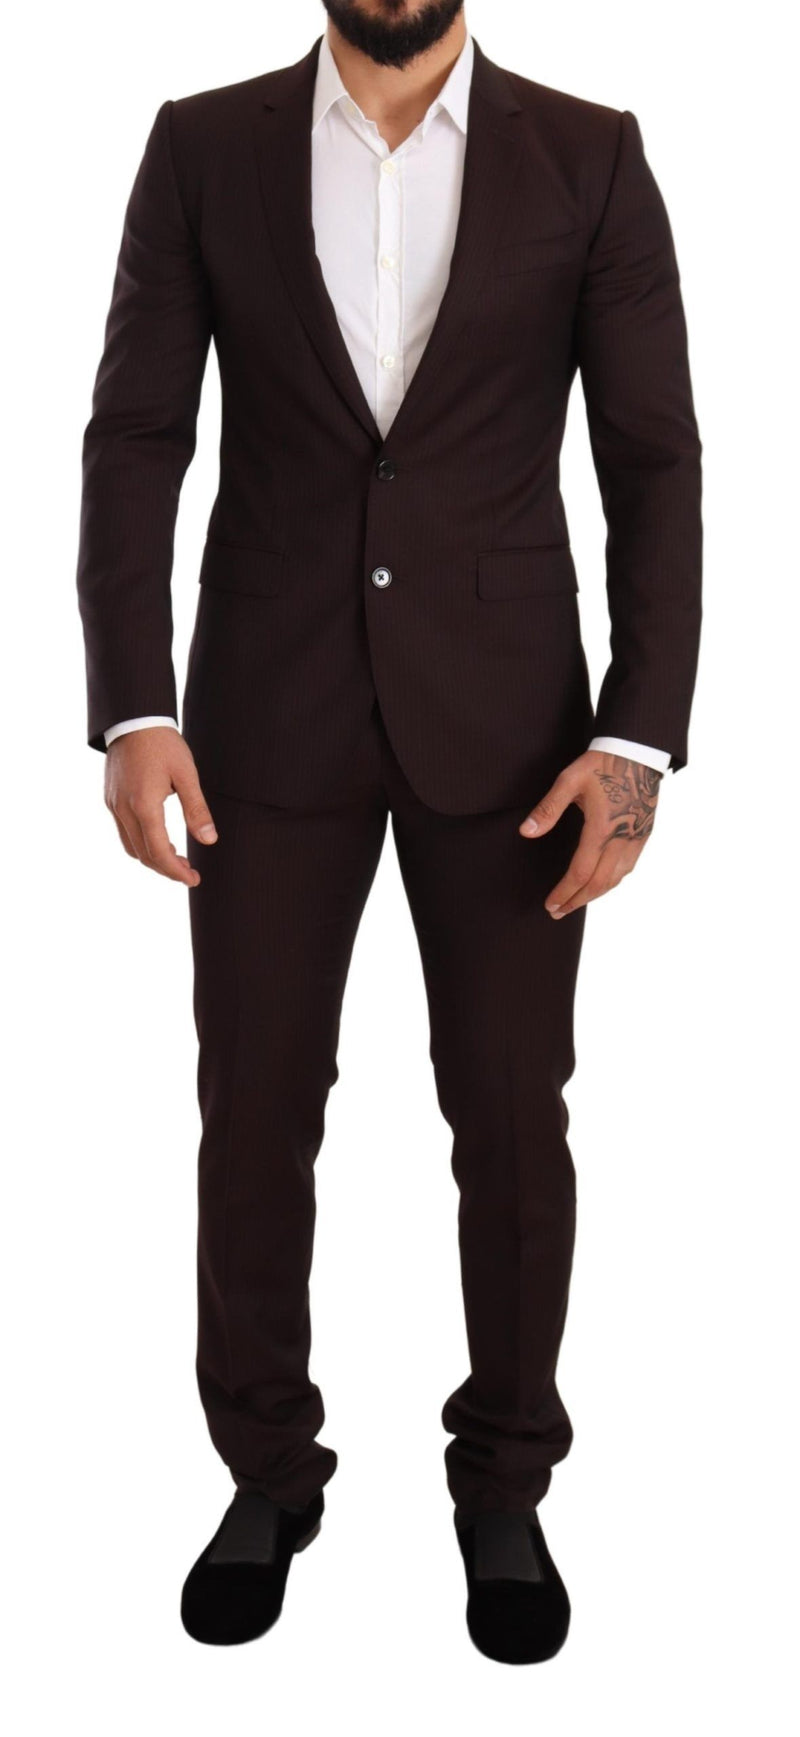 Dolce & Gabbana Elegant Bordeaux Striped Martini Men's Suit